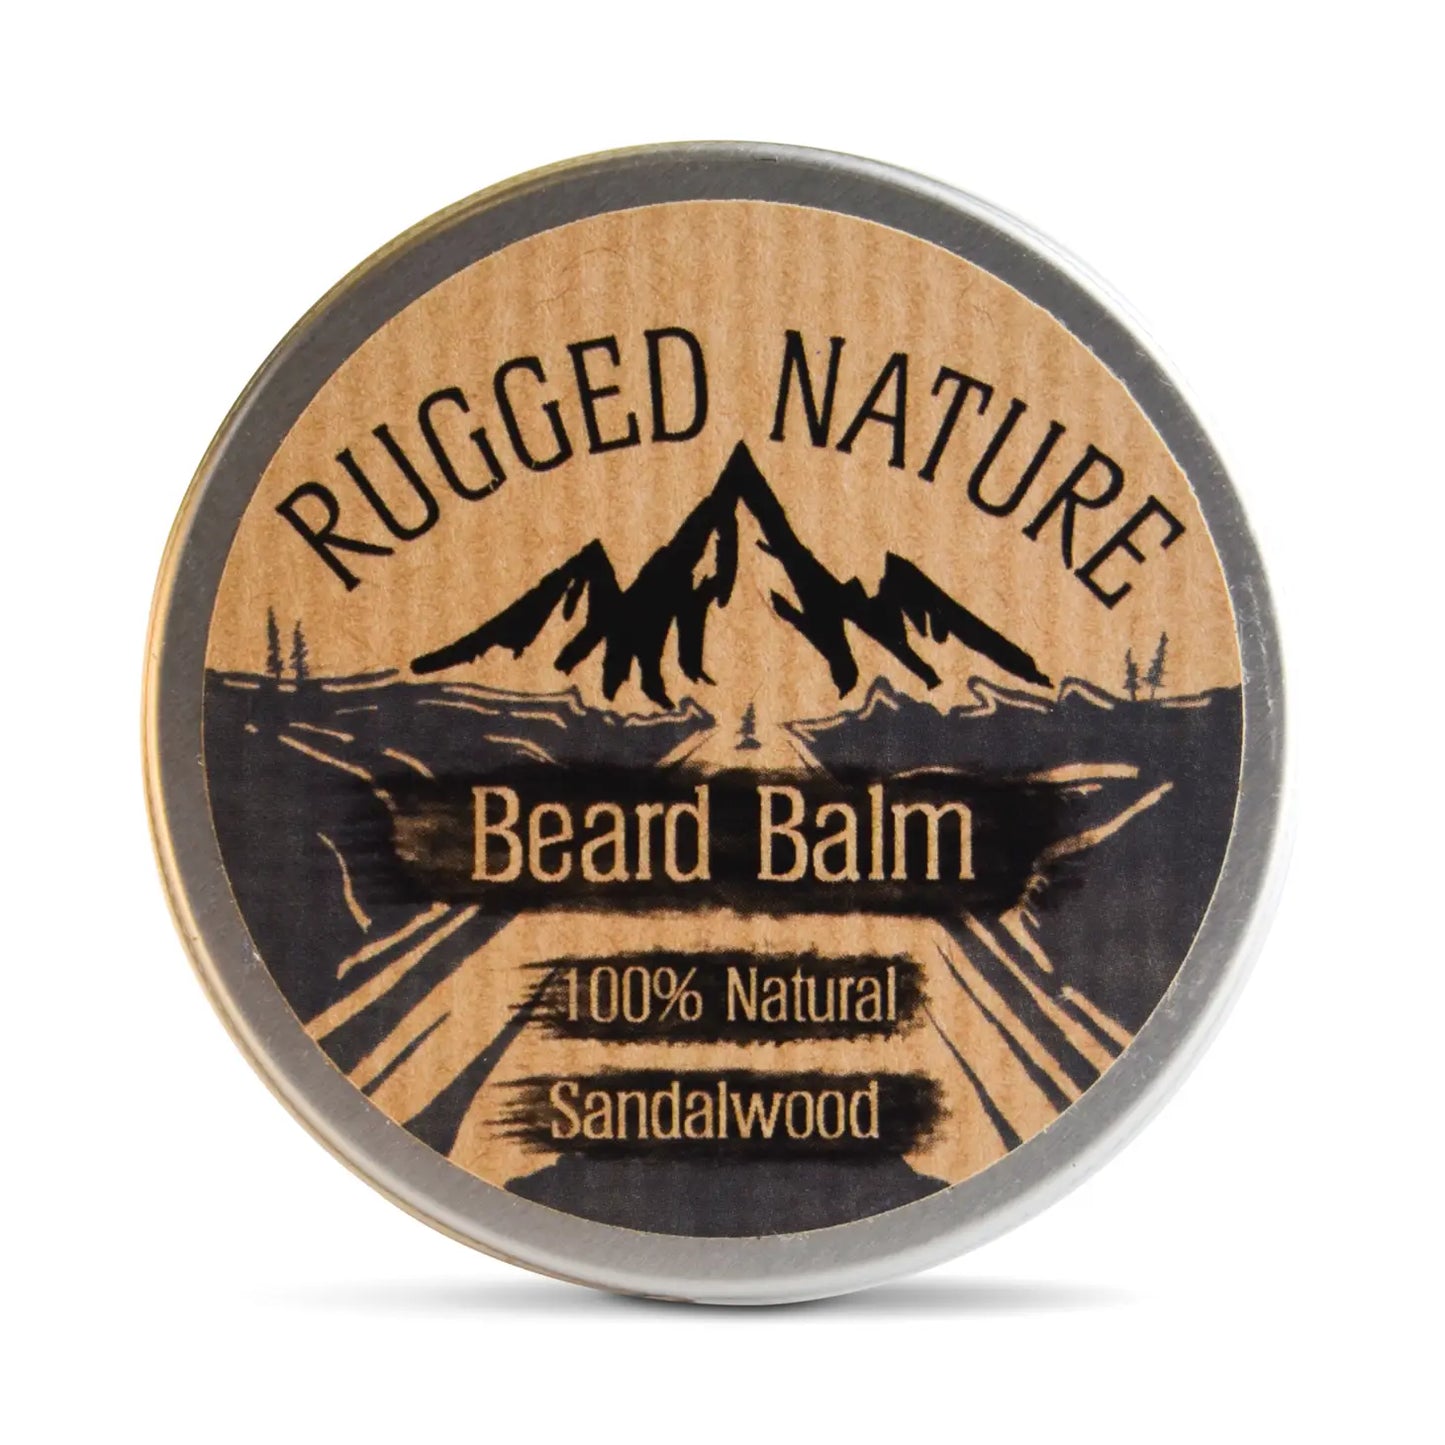 
                  
                    Rugged Nature Natural Sandalwood Beard Balm 50g
                  
                